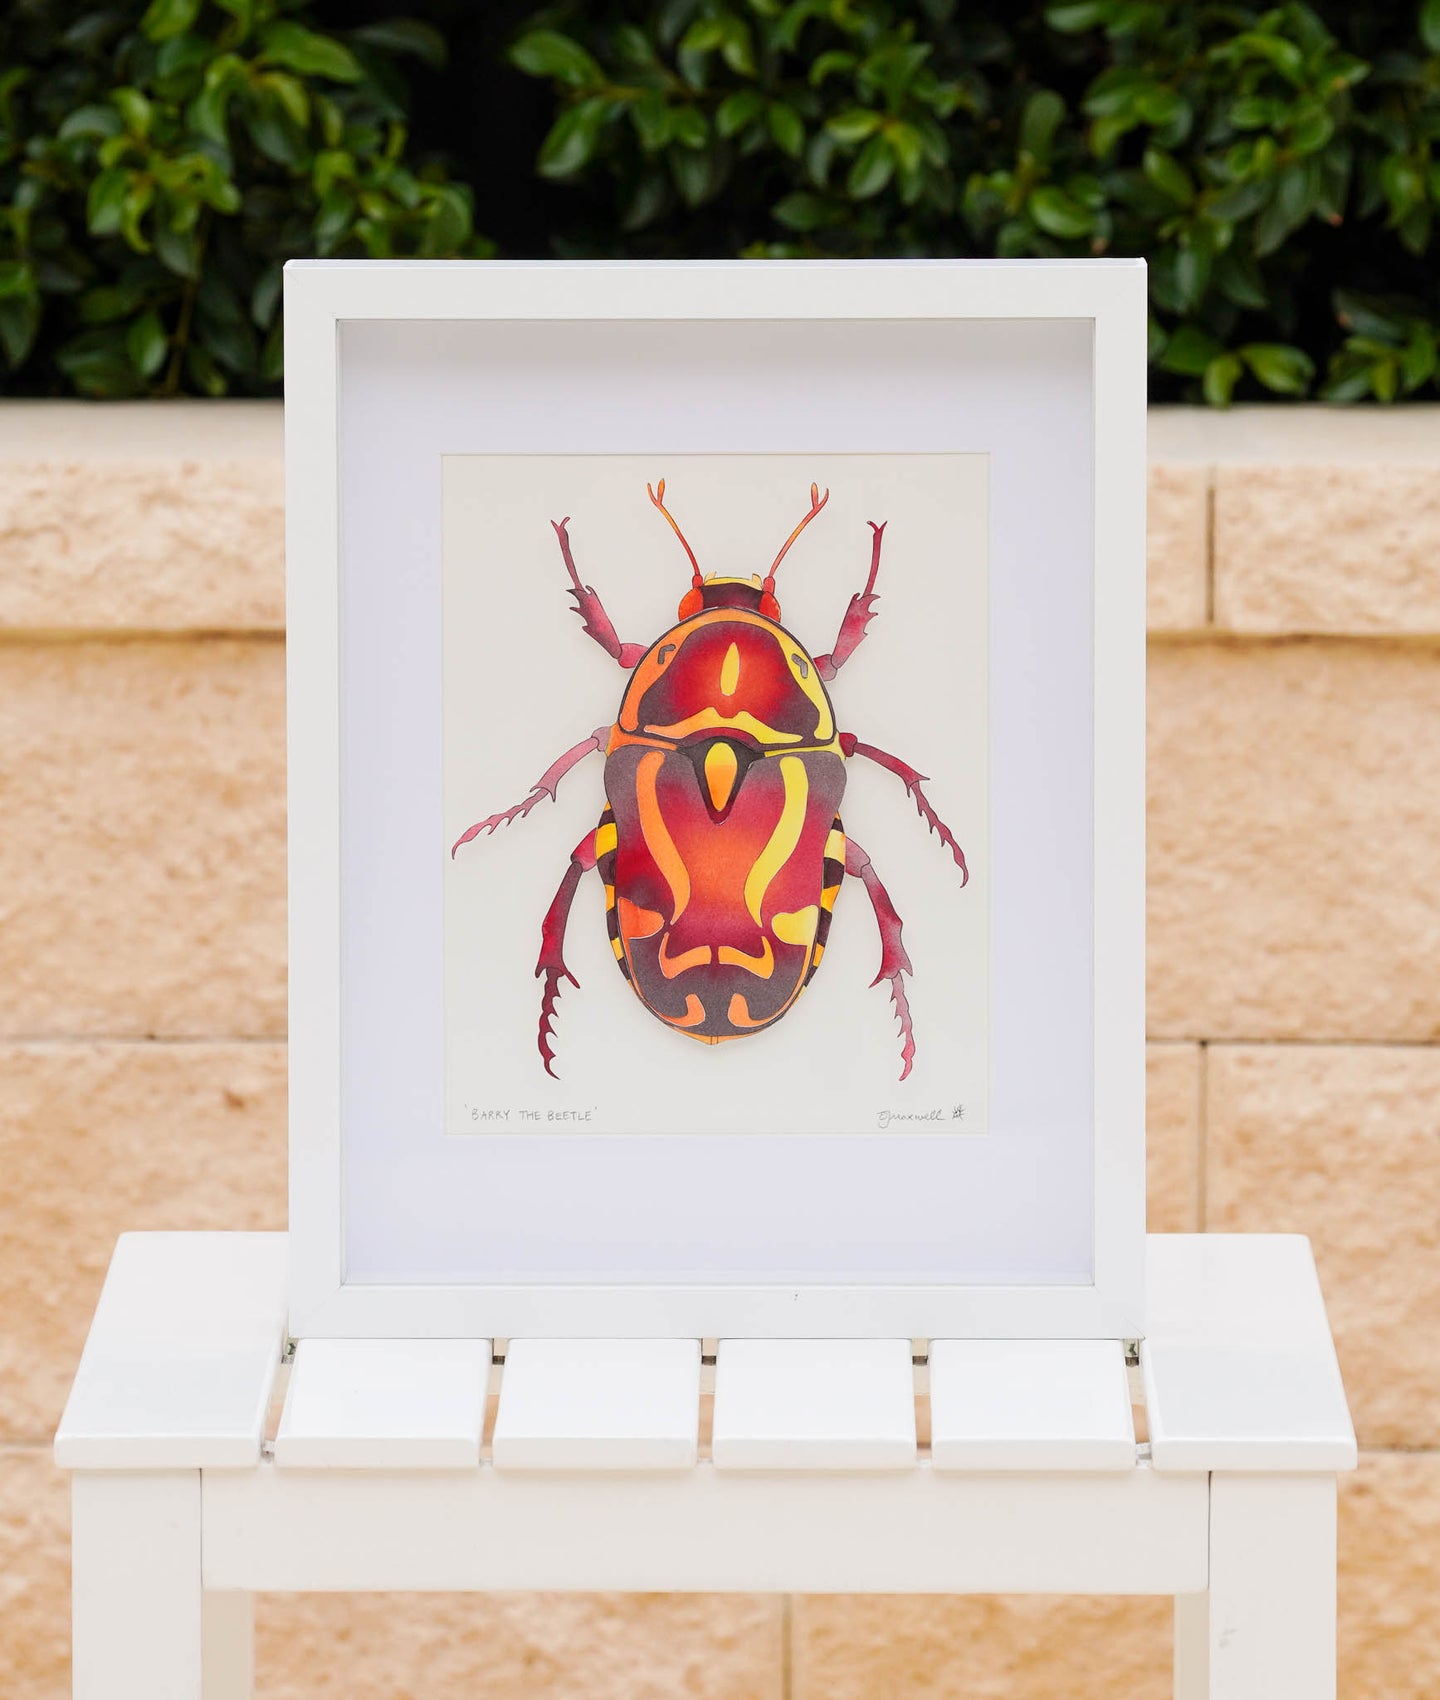 Framed Paper Sculpture - Barry The Beetle